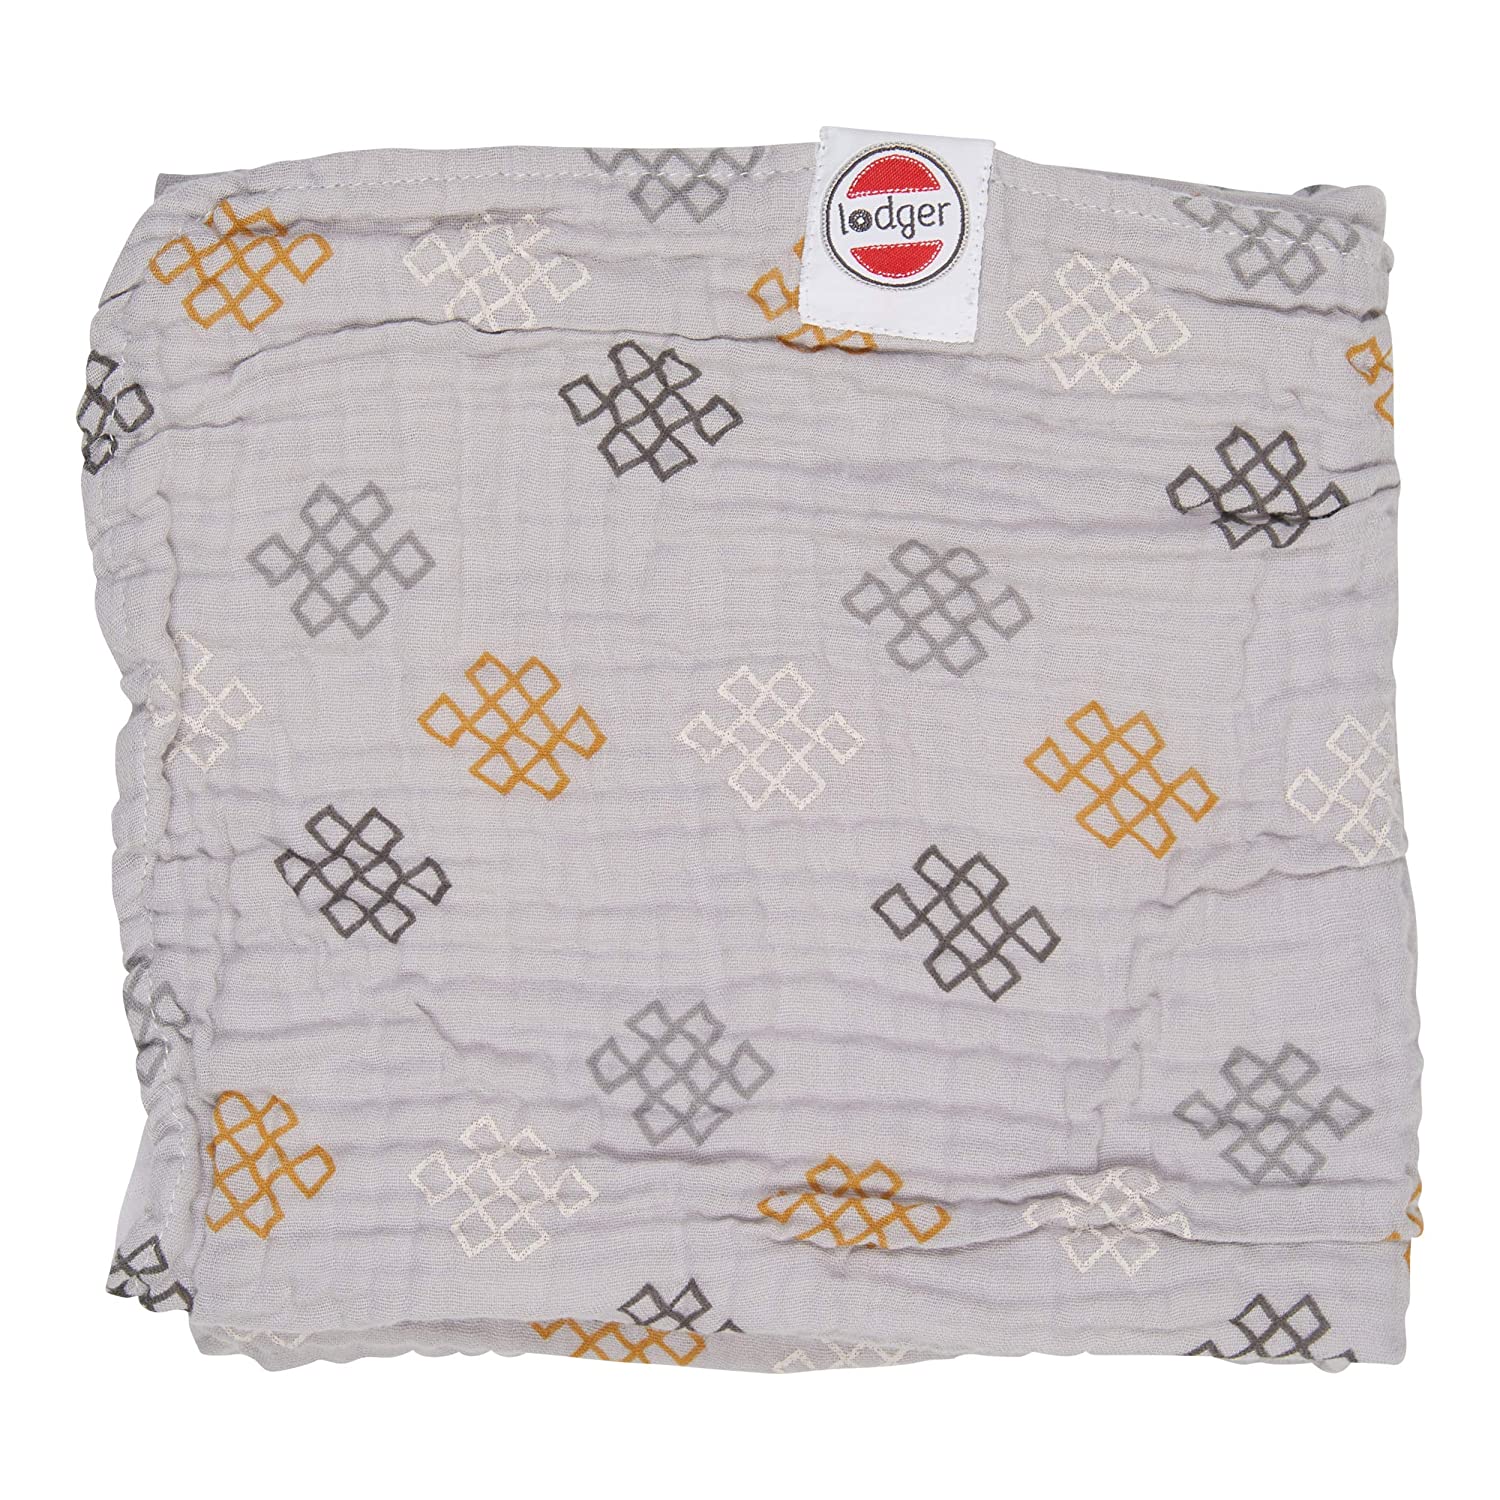 Lodger DM6.7.002 052 120 Baby Blanket Dreamer Xandu Knot 120 x 120 cm Grey